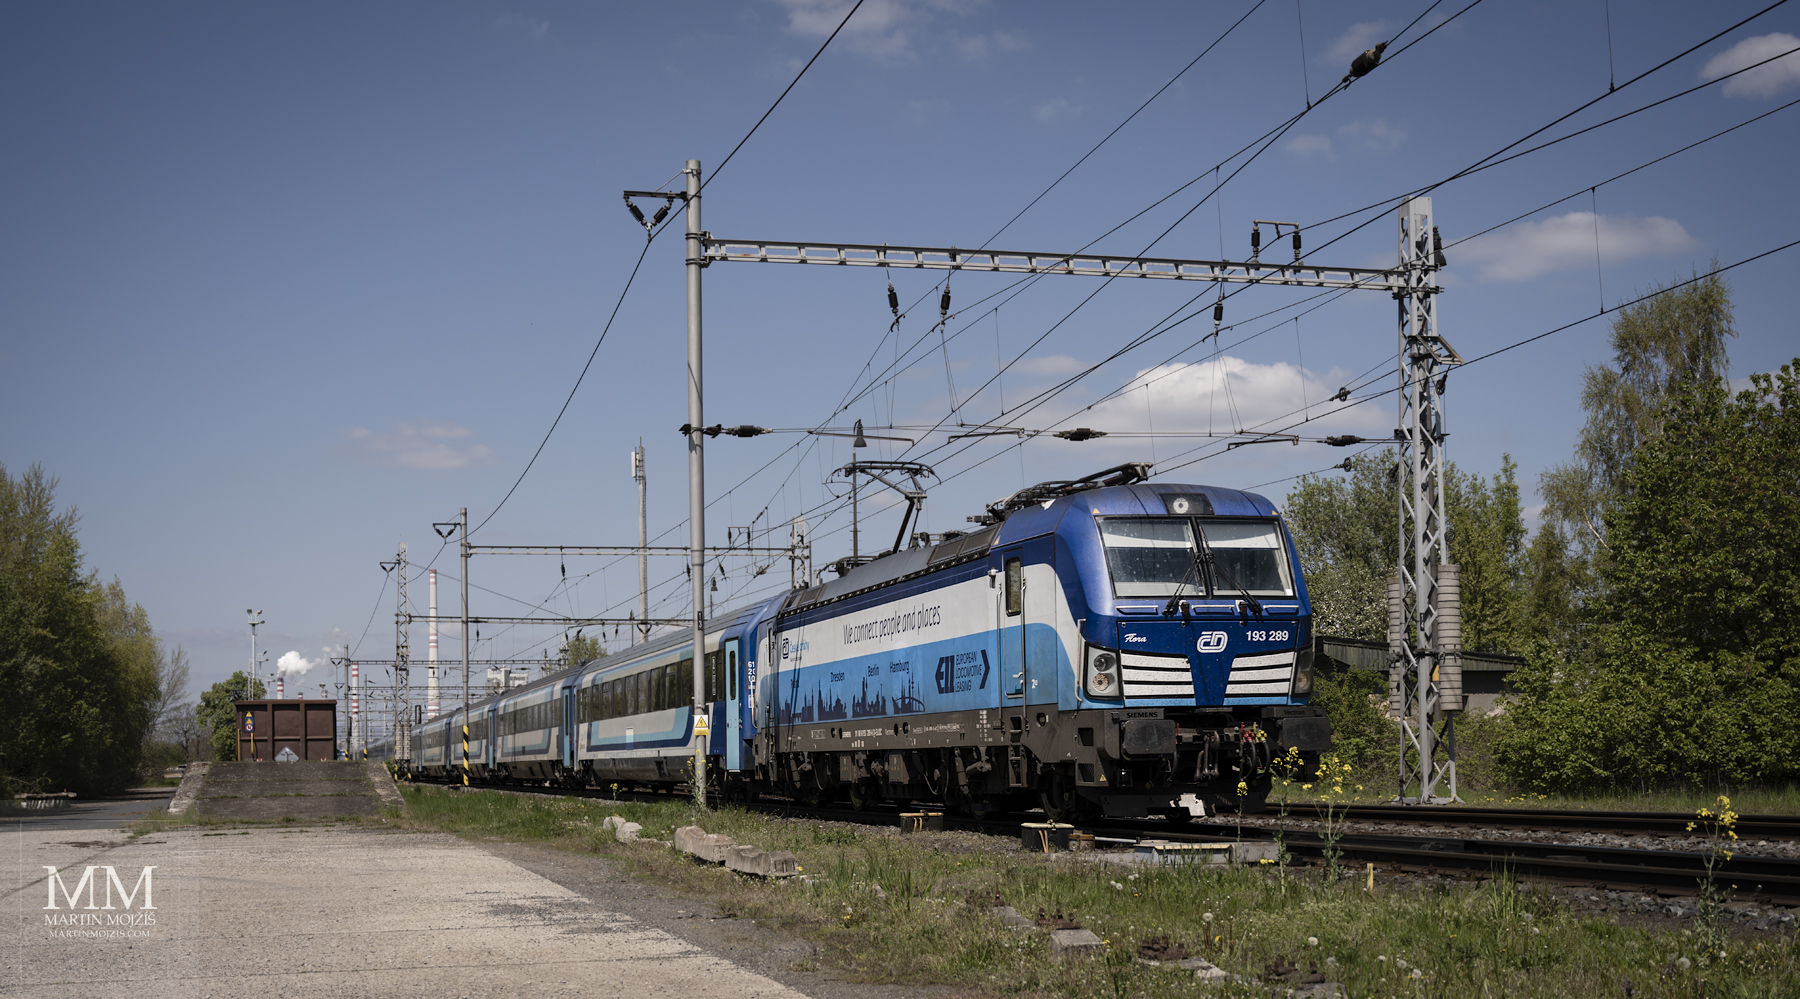 Locomotive 193 289 Flora at the head of the Vindobona international express.